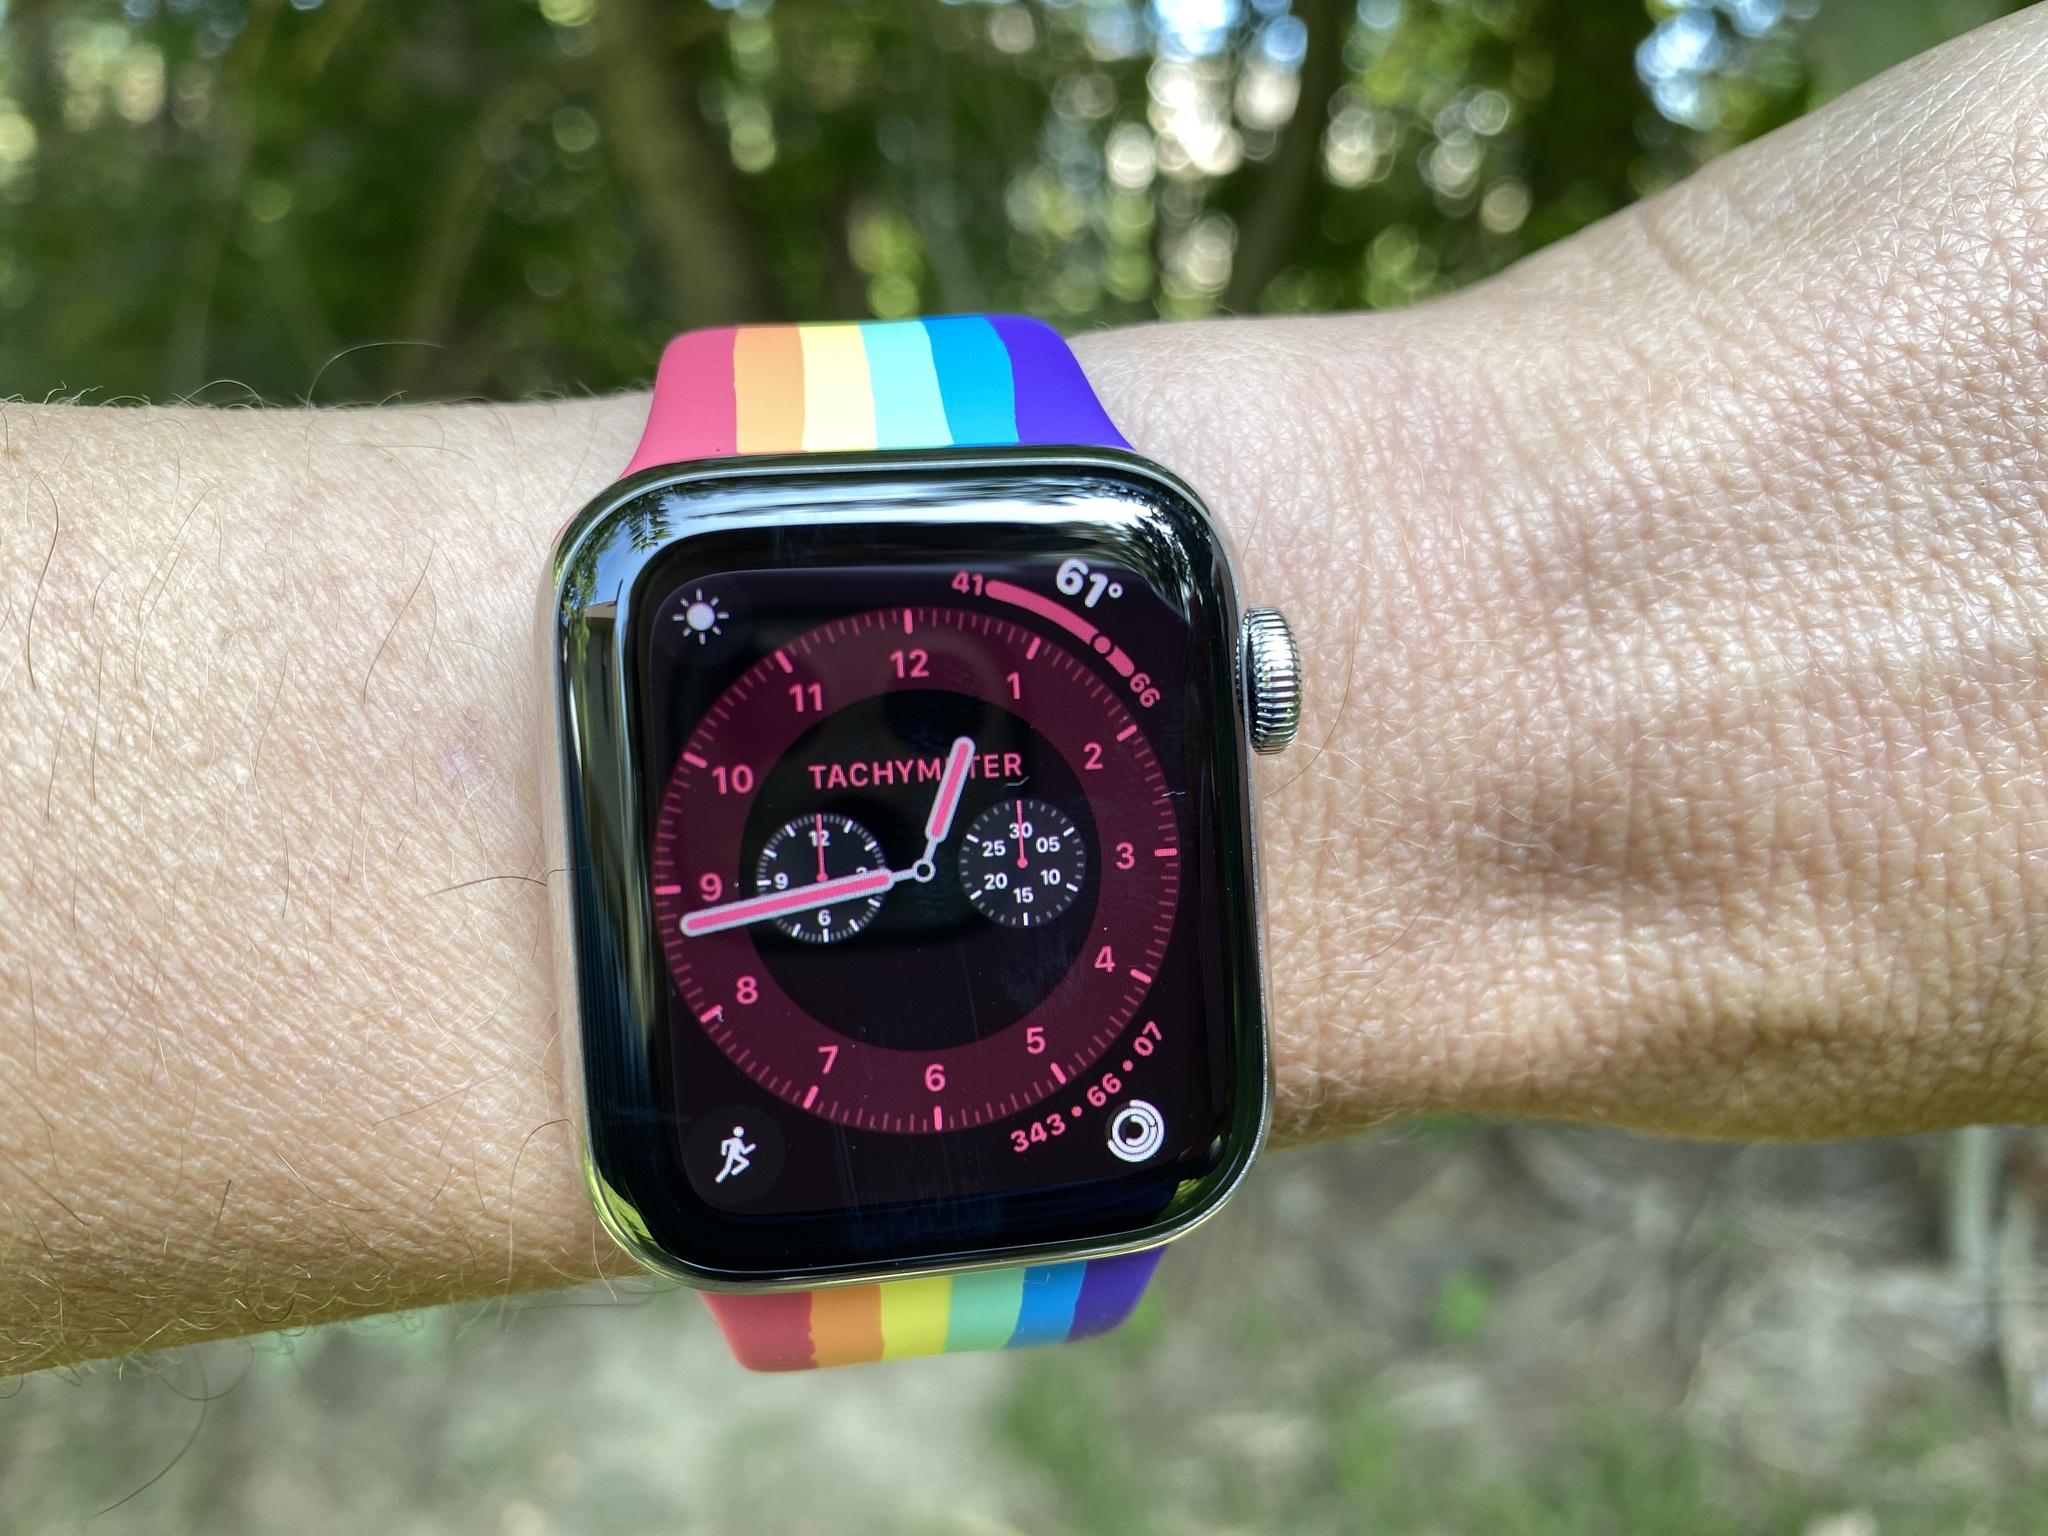 Apple Watch Series 6 Pride Watchband Chronograph Pro Watch Face Hero